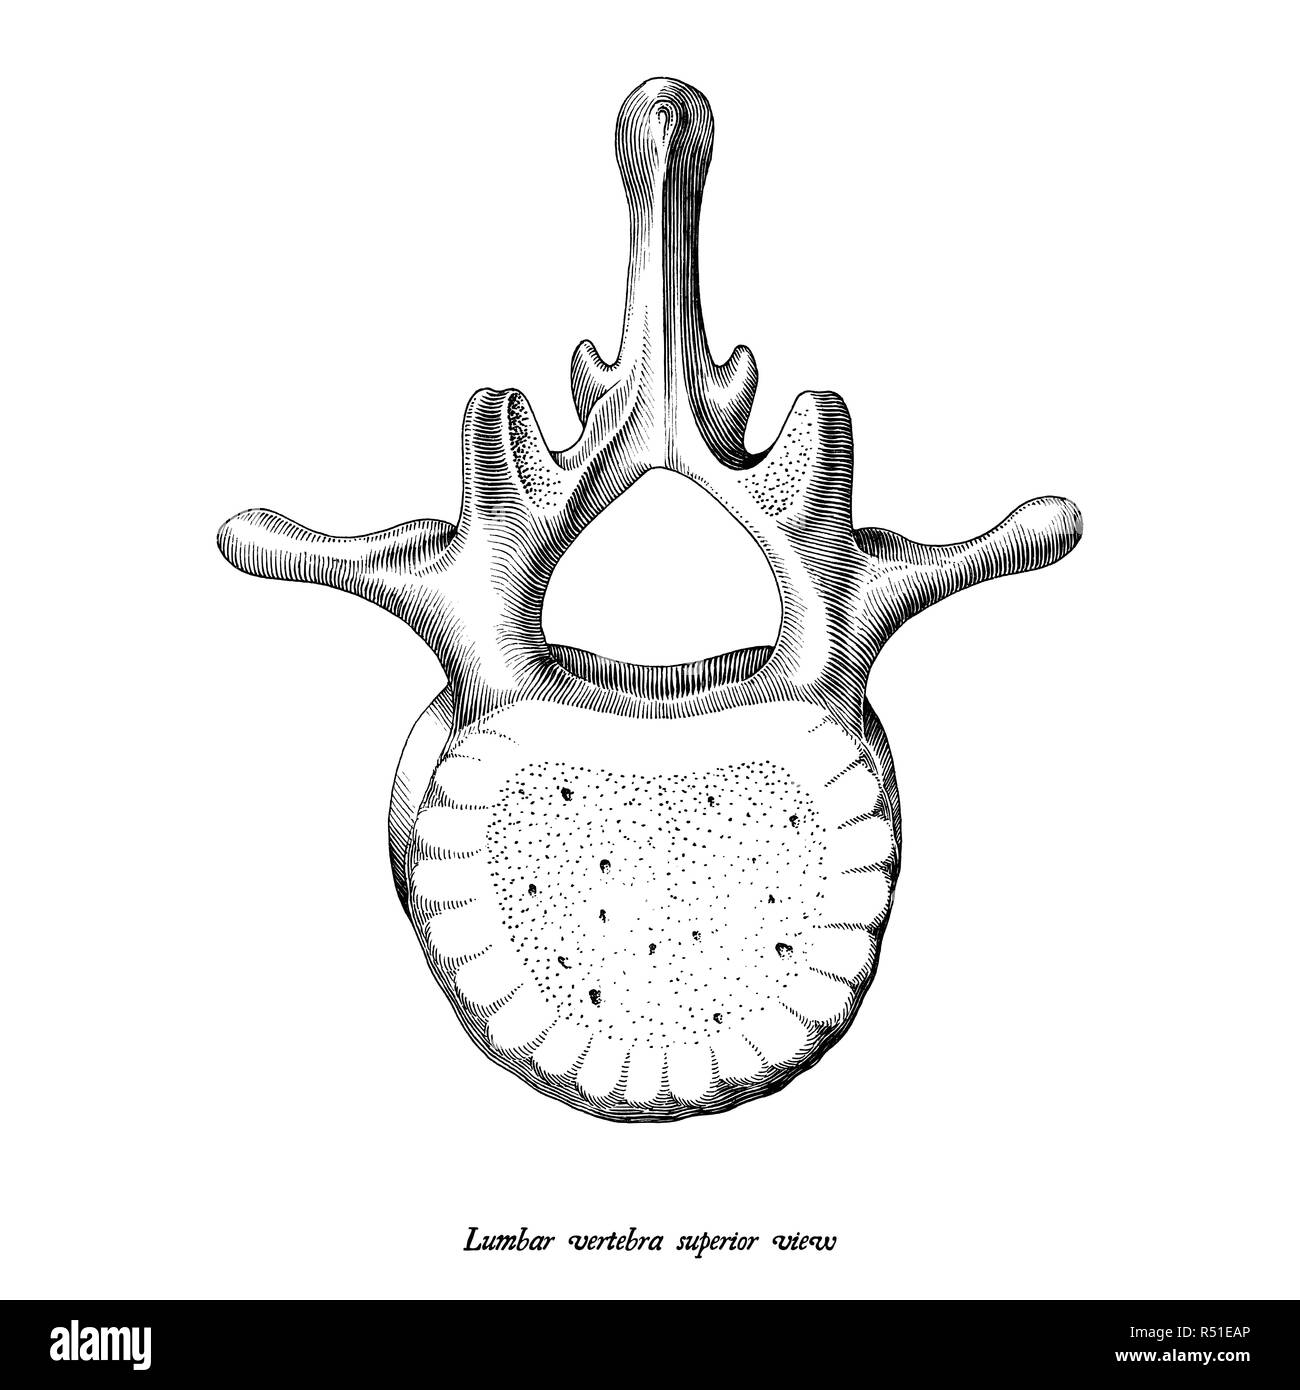 Lumbar vertebra superior view anatomy hand draw vintage clip art isolated on white background Stock Vector